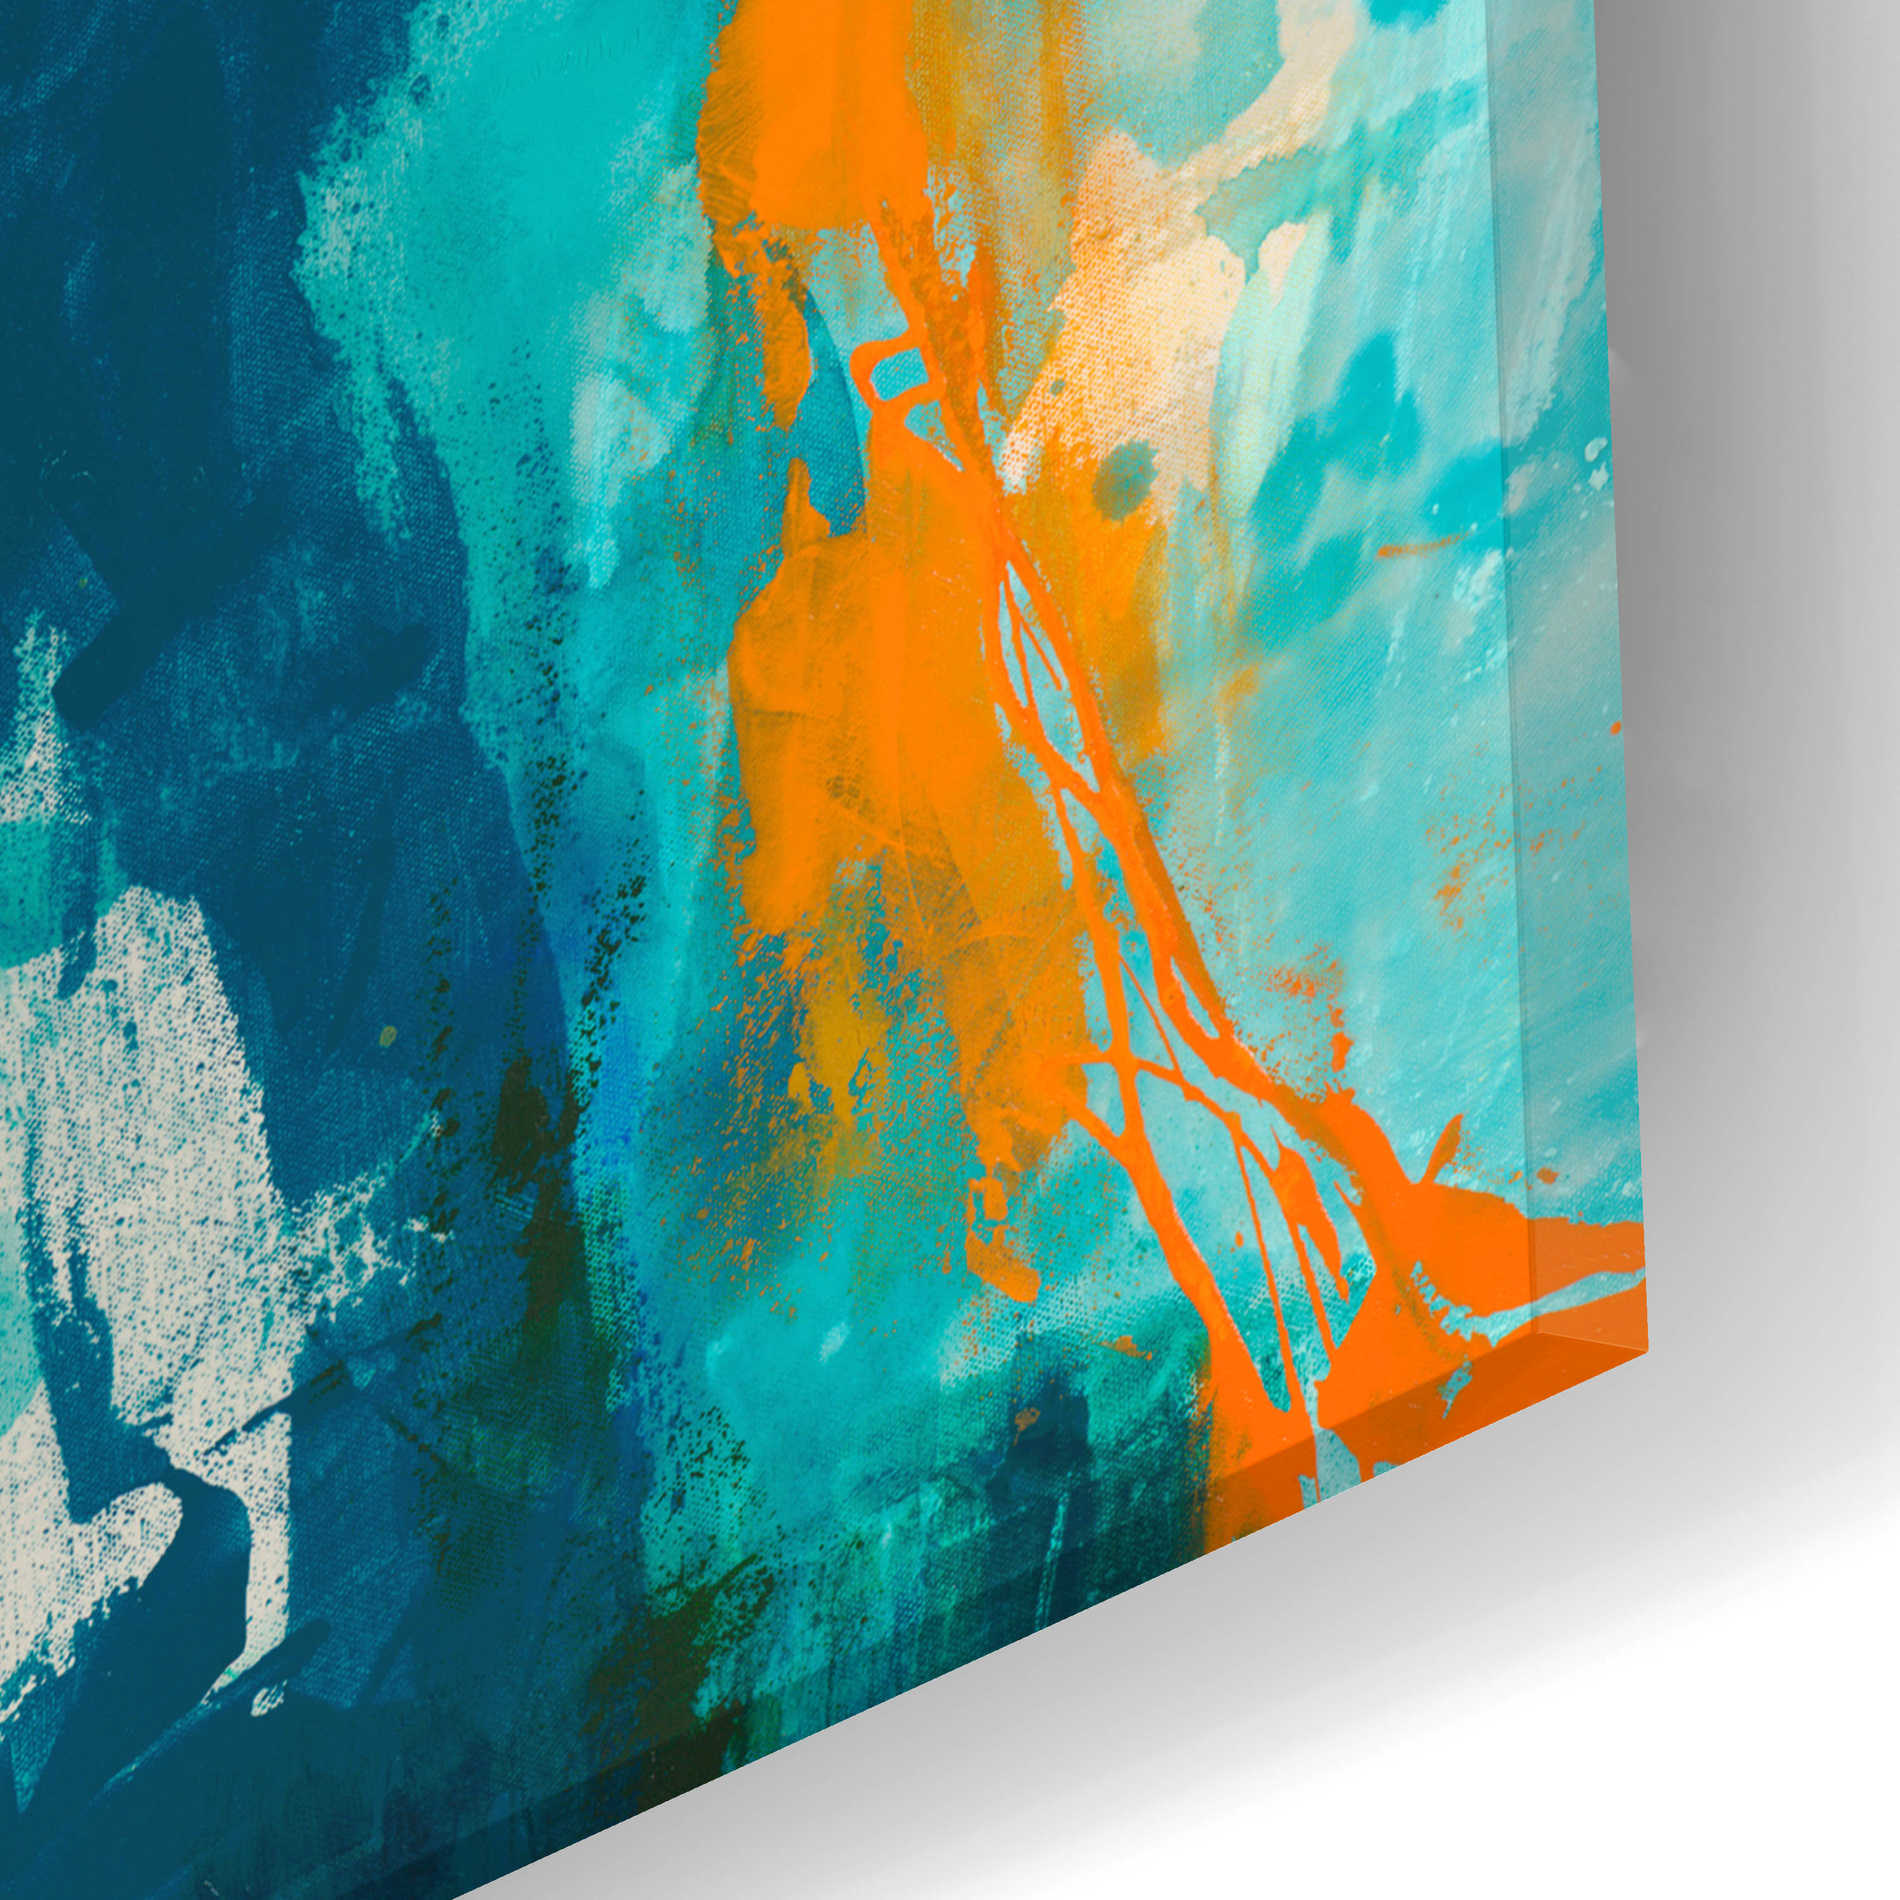 Epic Art 'Tidal Abstract I' by Sisa Jasper,' Acrylic Glass Wall Art,24x12